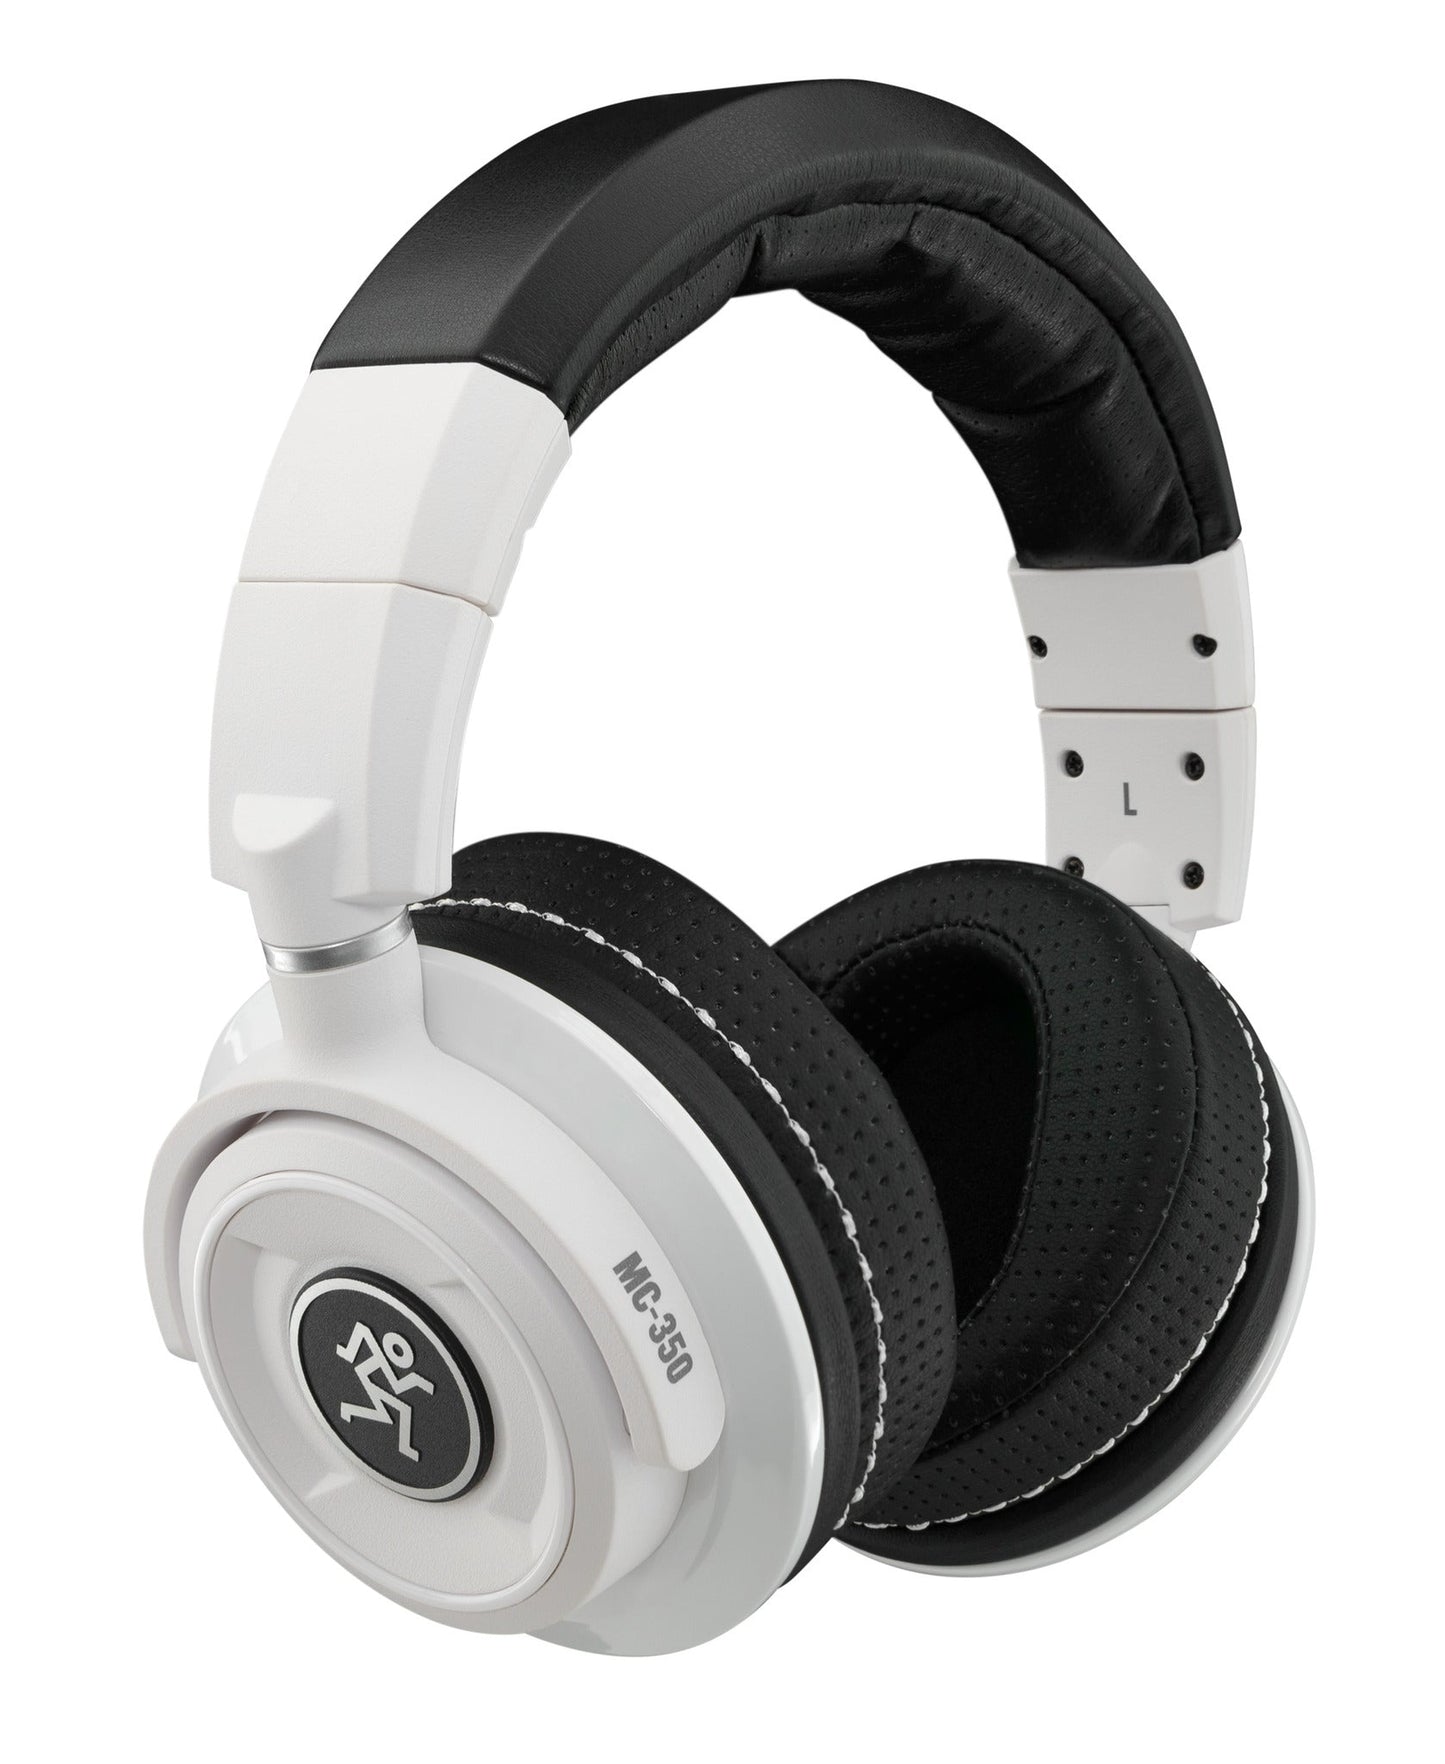 Mackie MC-350 Professional Closed-Back Headphones - White